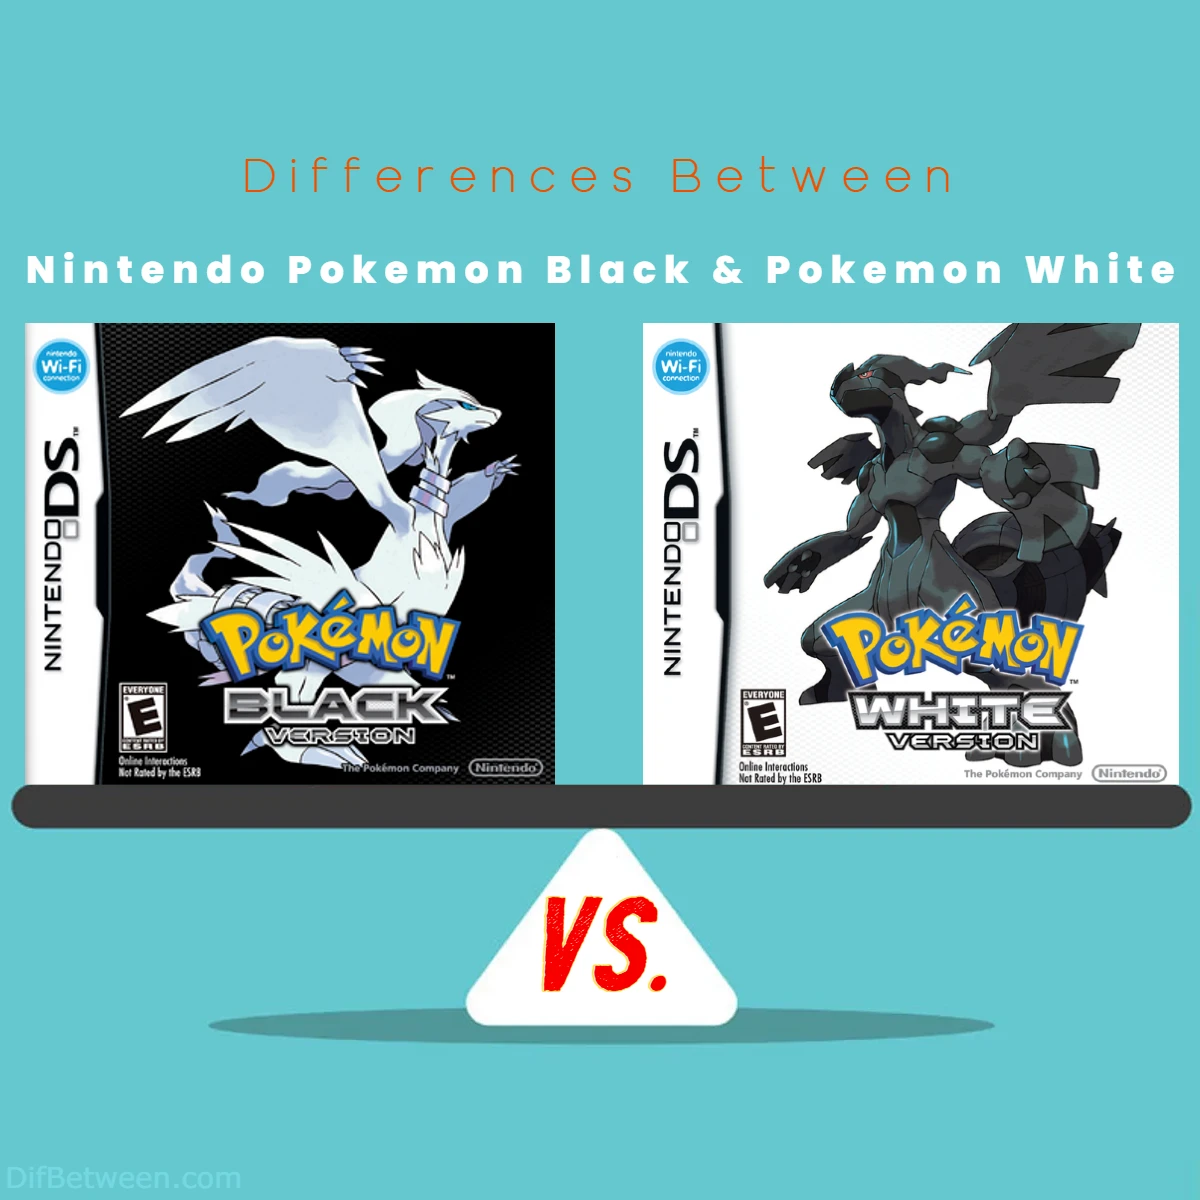 Differences Between Nintendo Pokemon Black vs Pokemon White